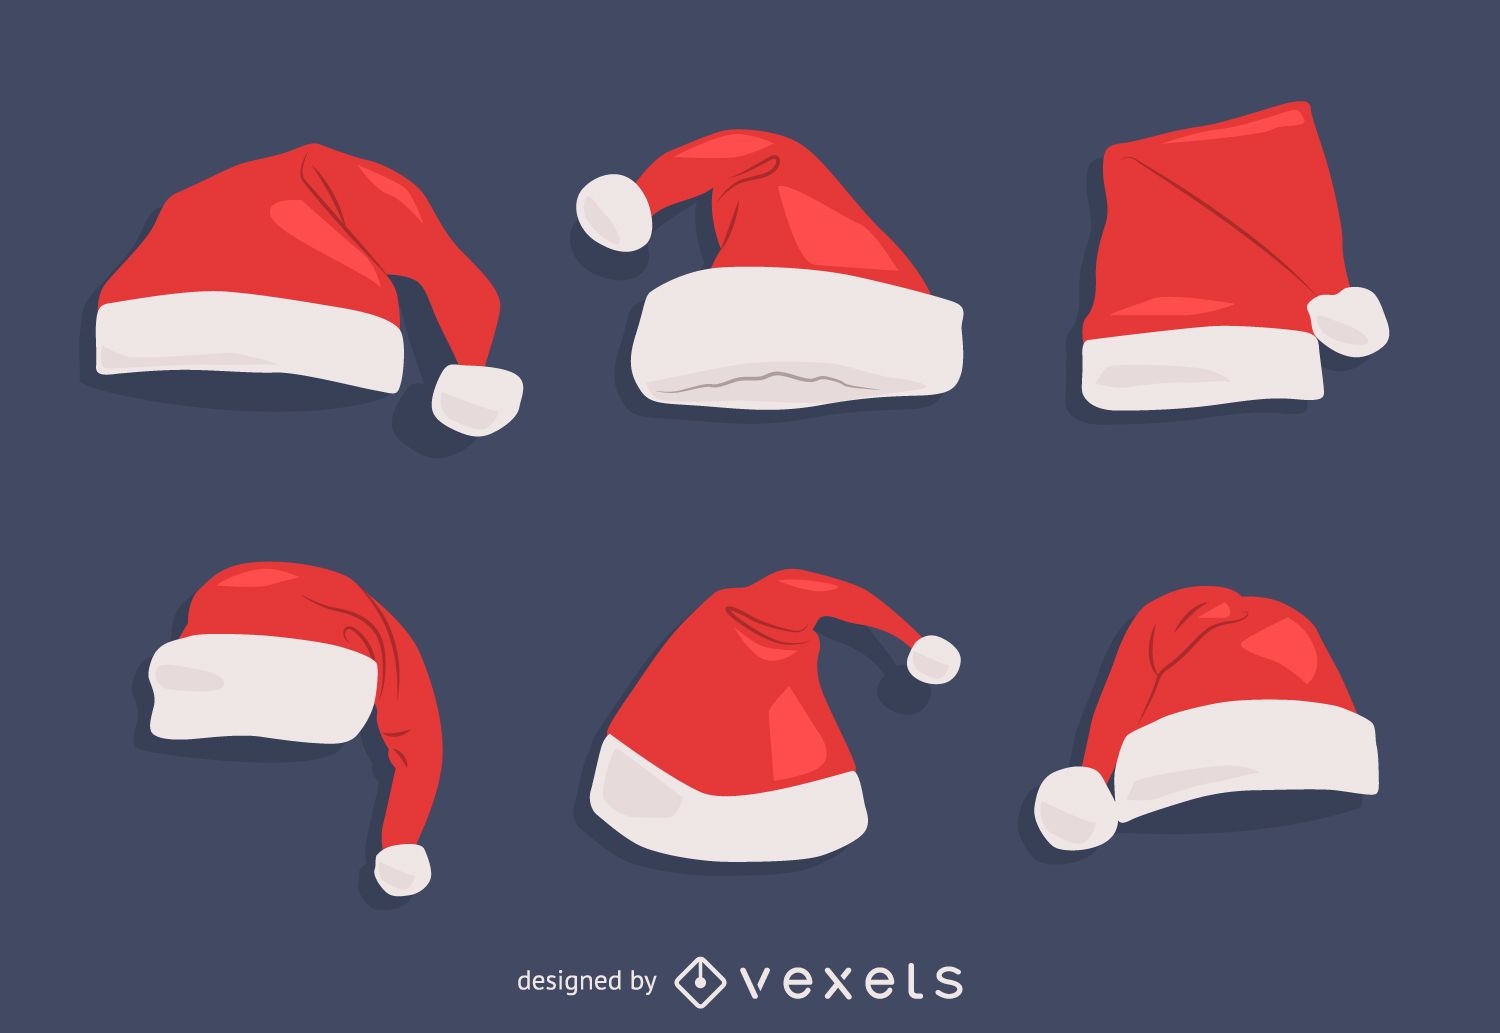 Christmas Santa hat illustrations set